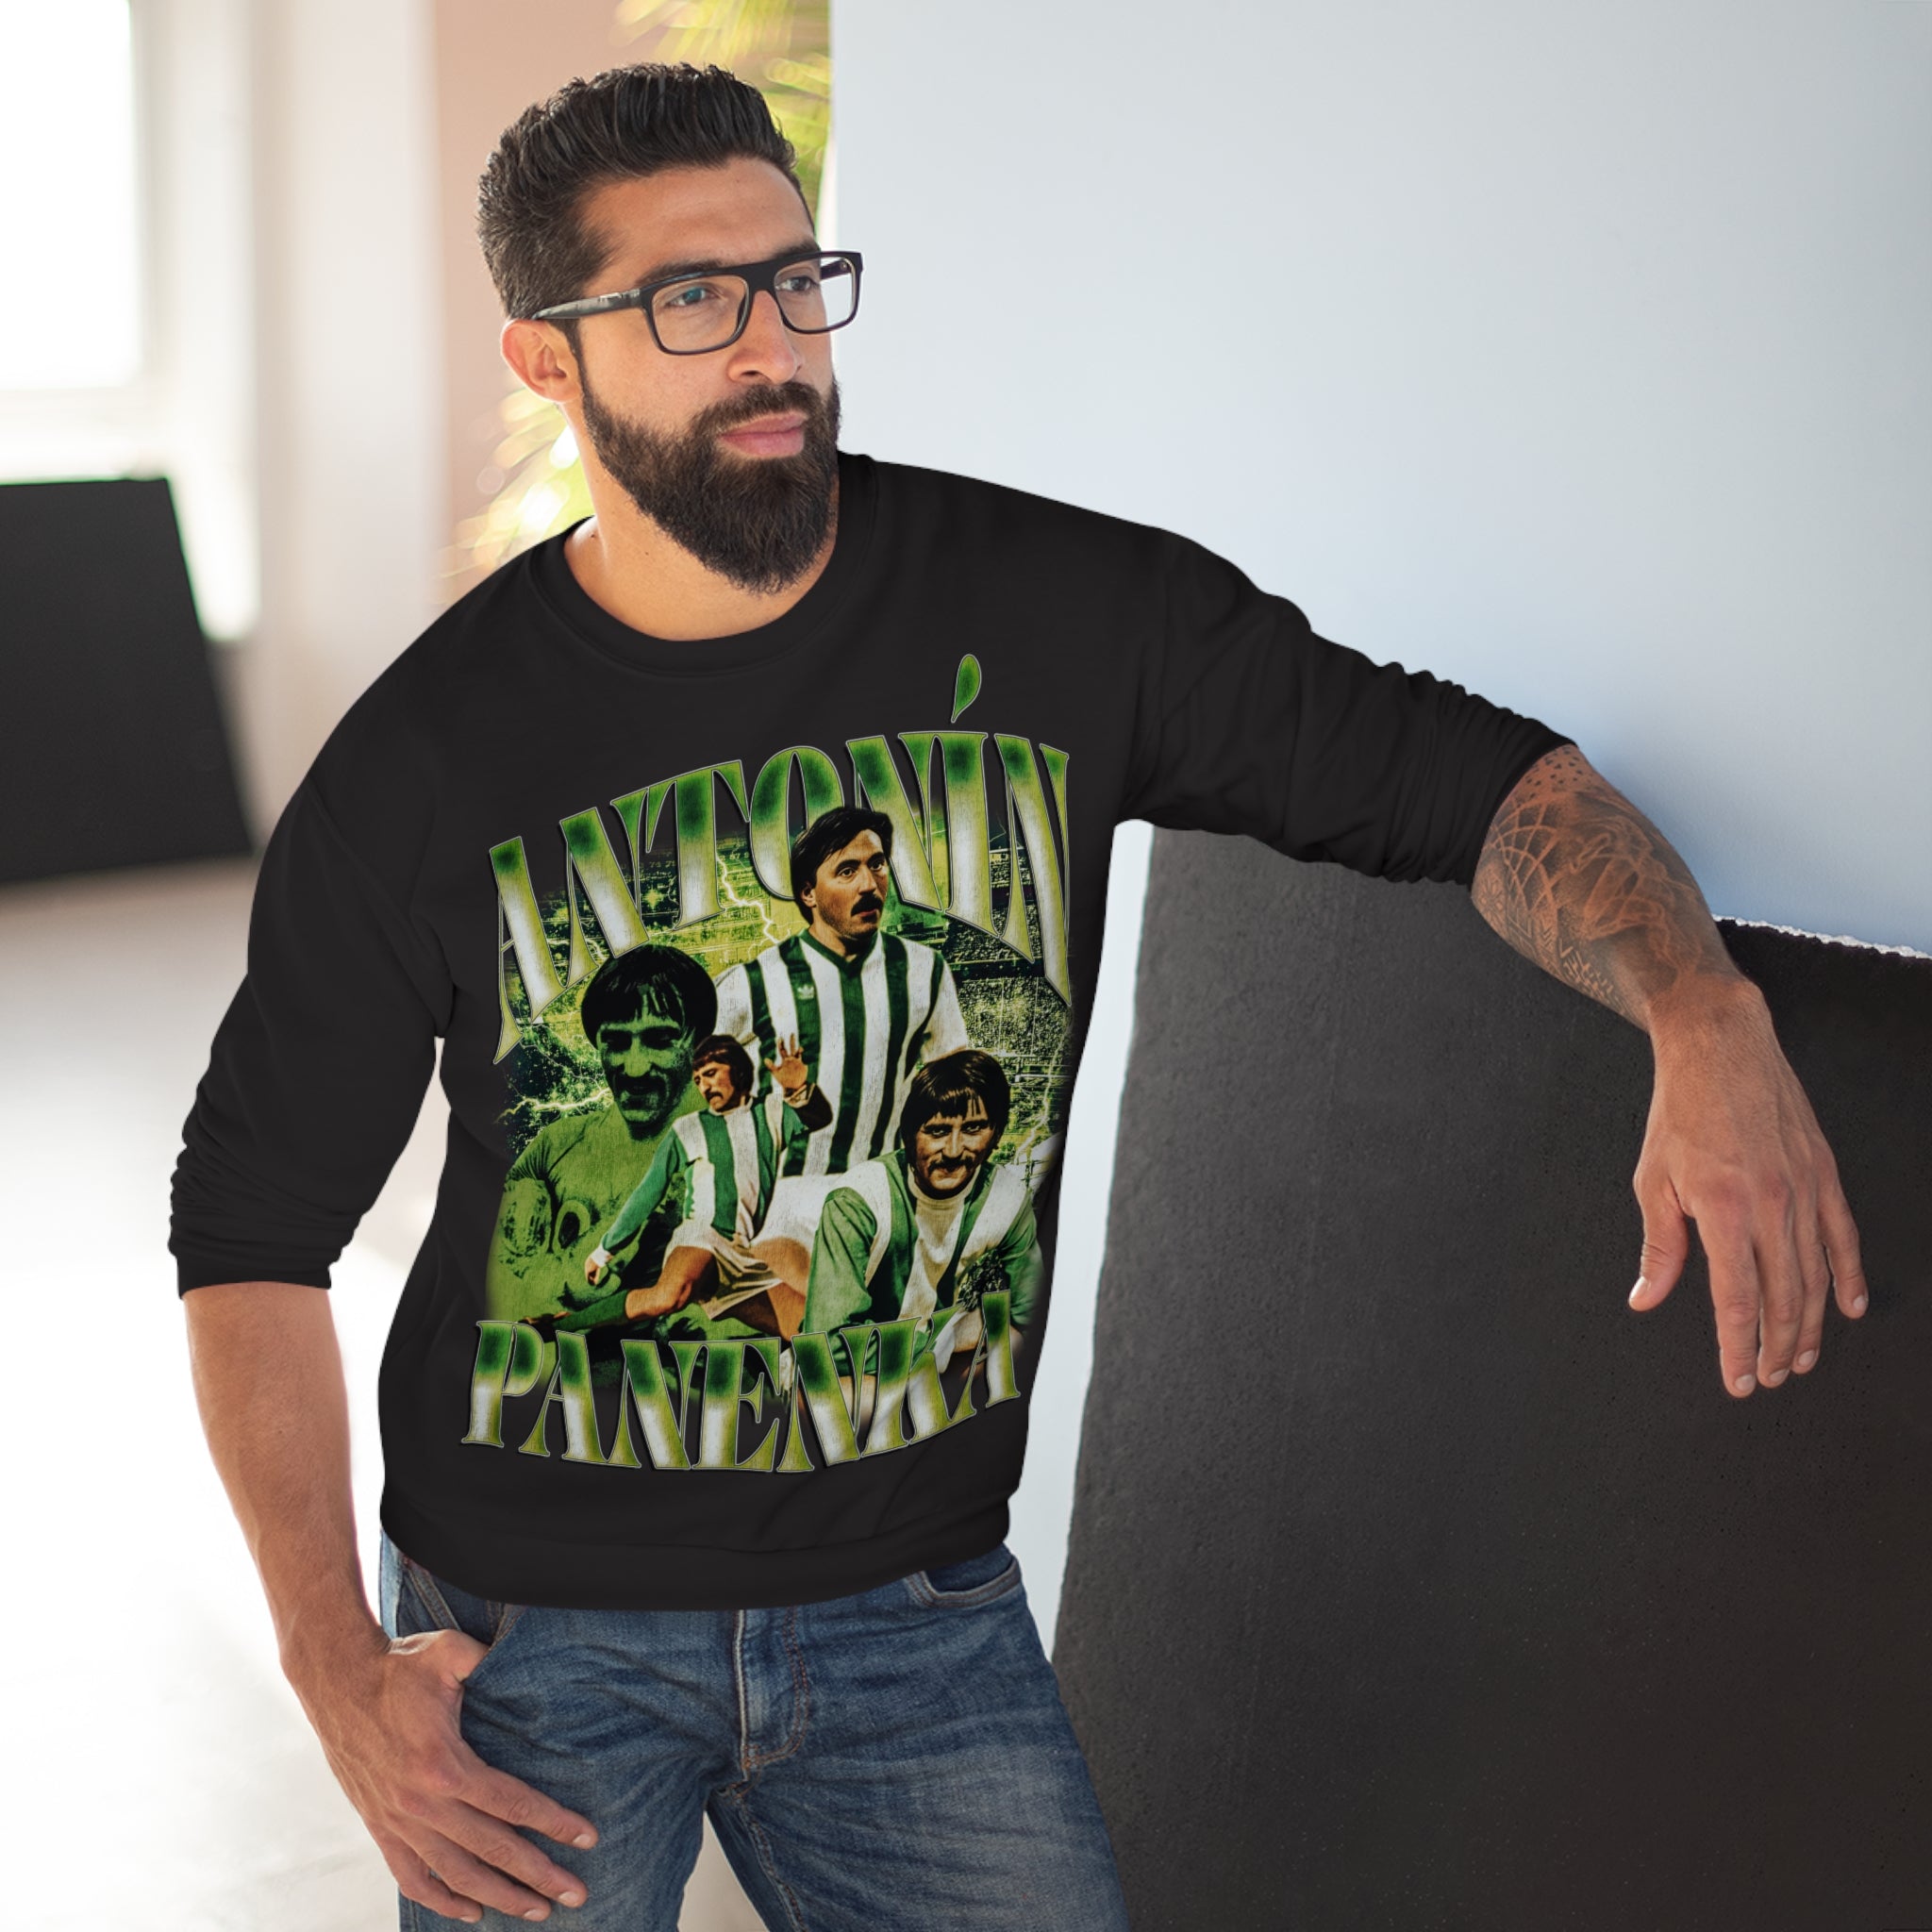 Antonín Panenka Crew Neck Sweatshirt